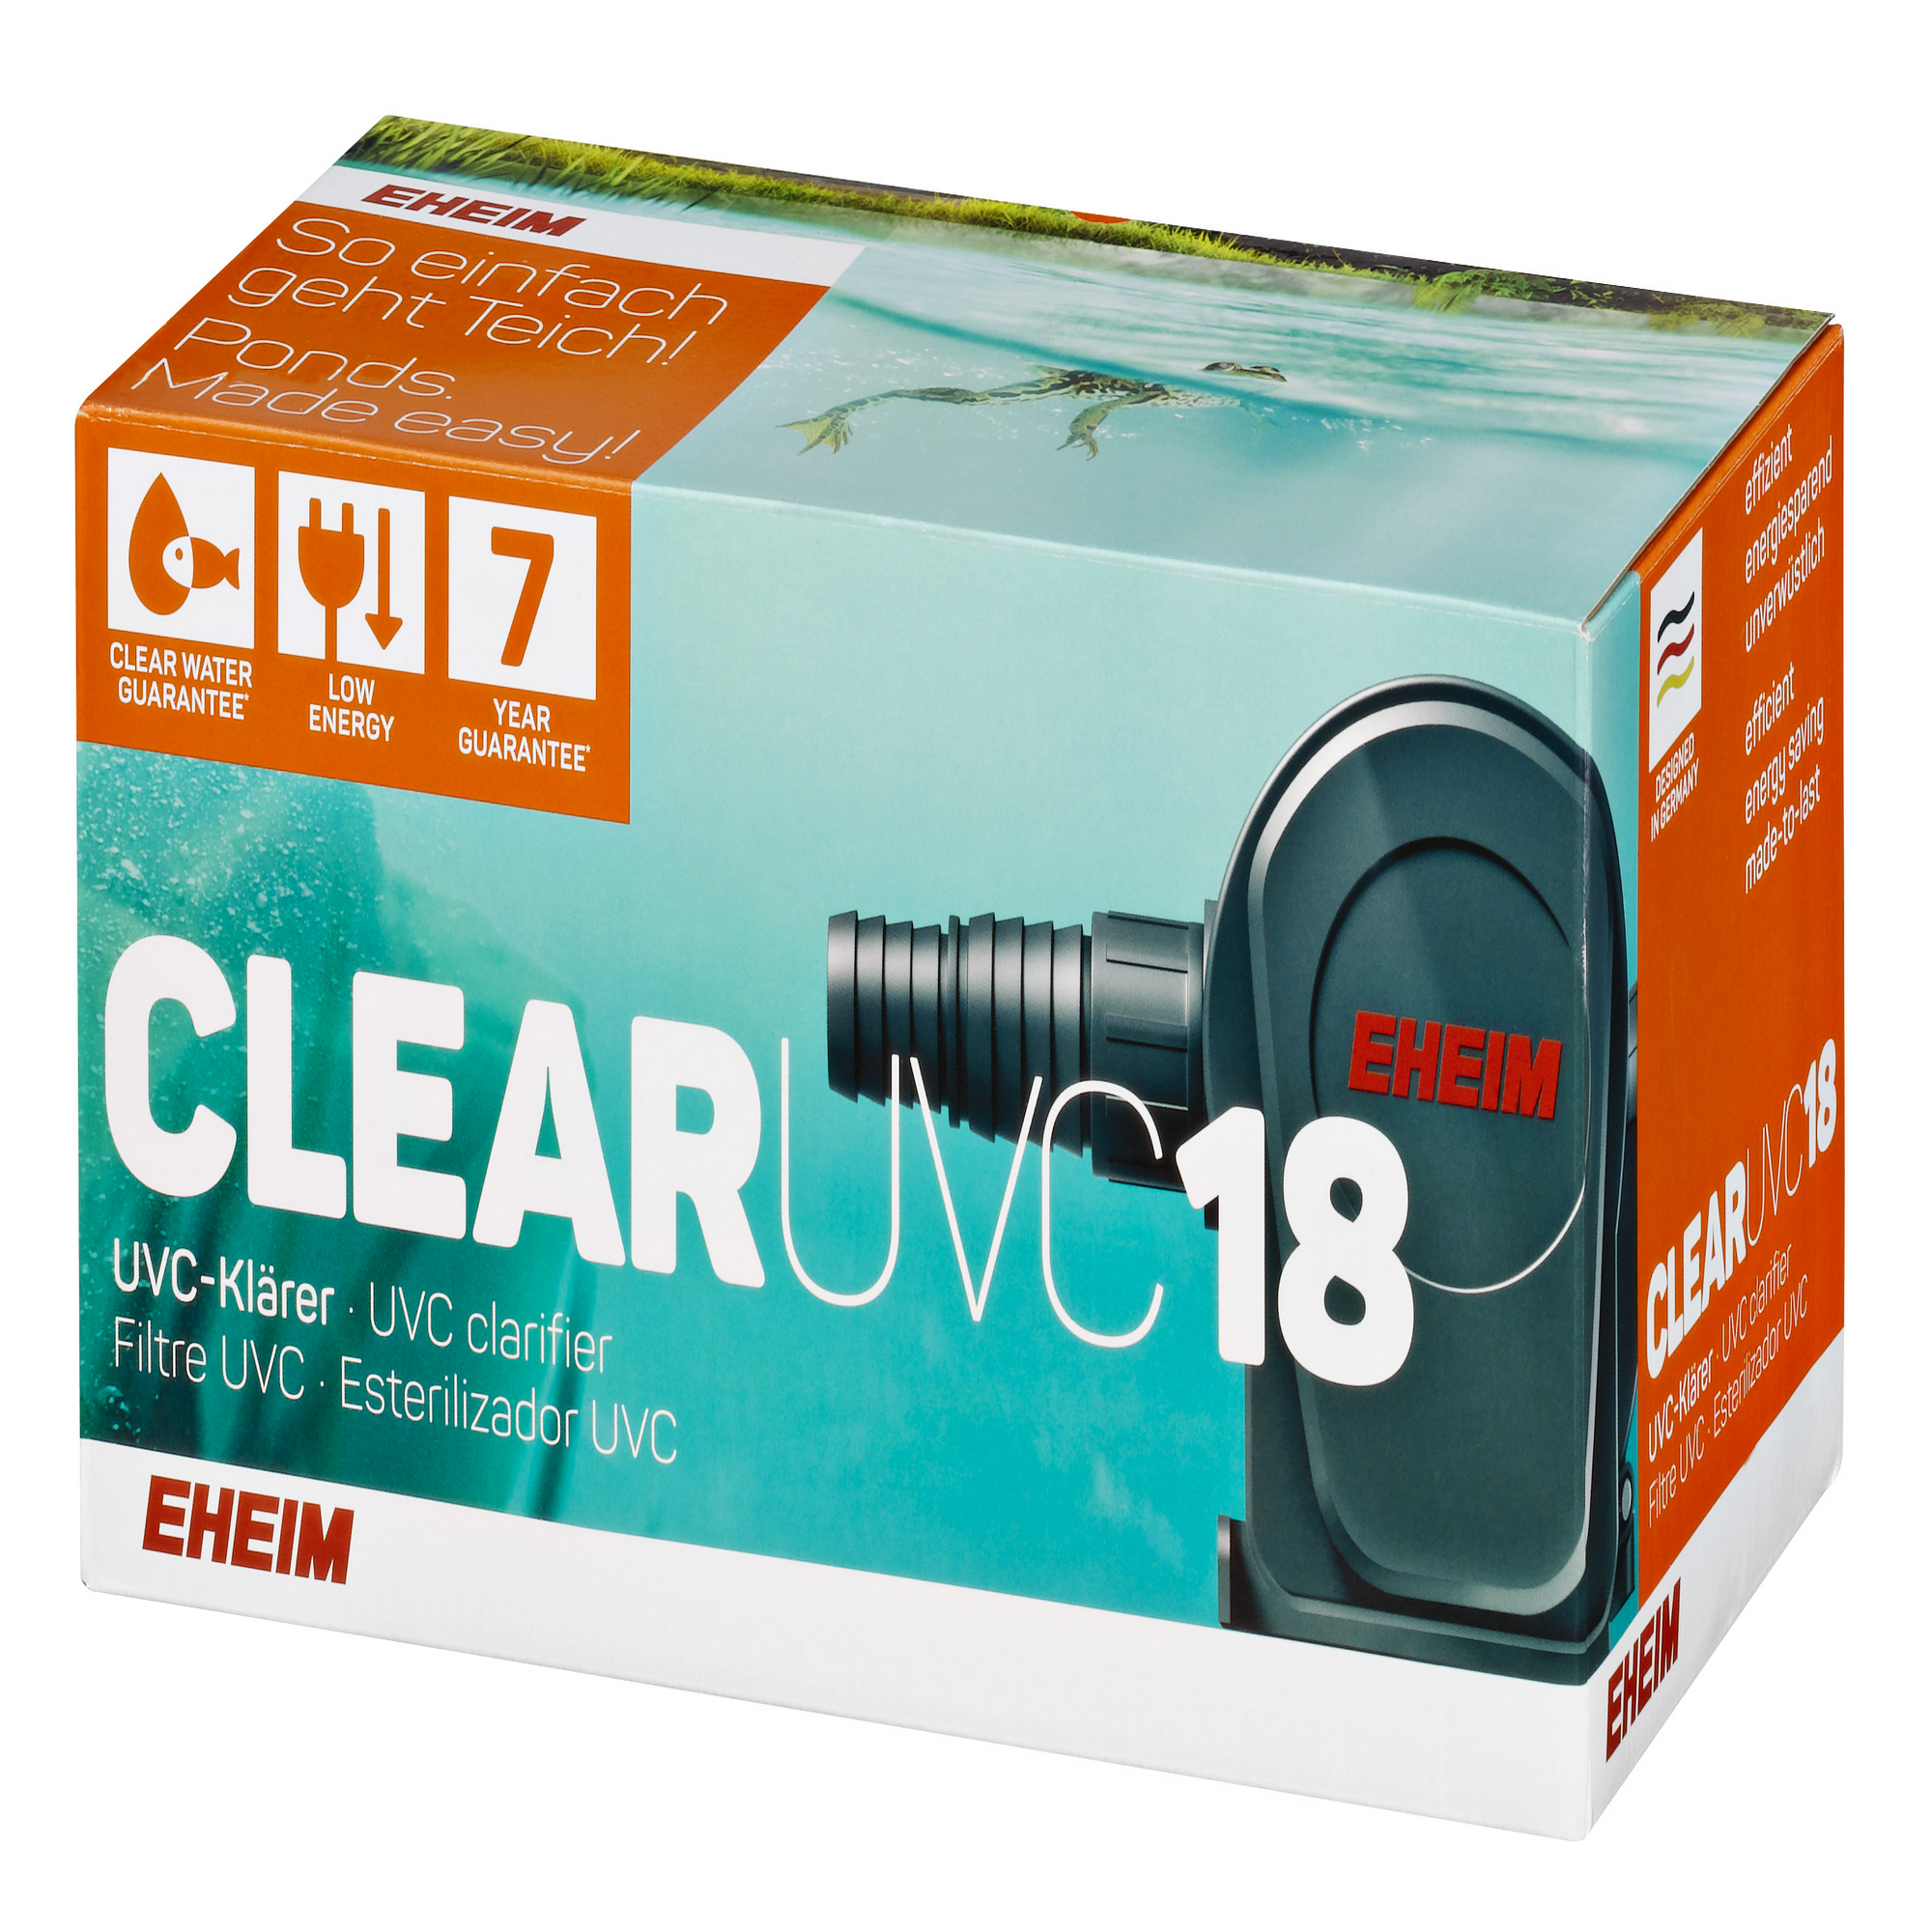 EHEIM CLEAR UVC 18 UVC-Klärer + product picture